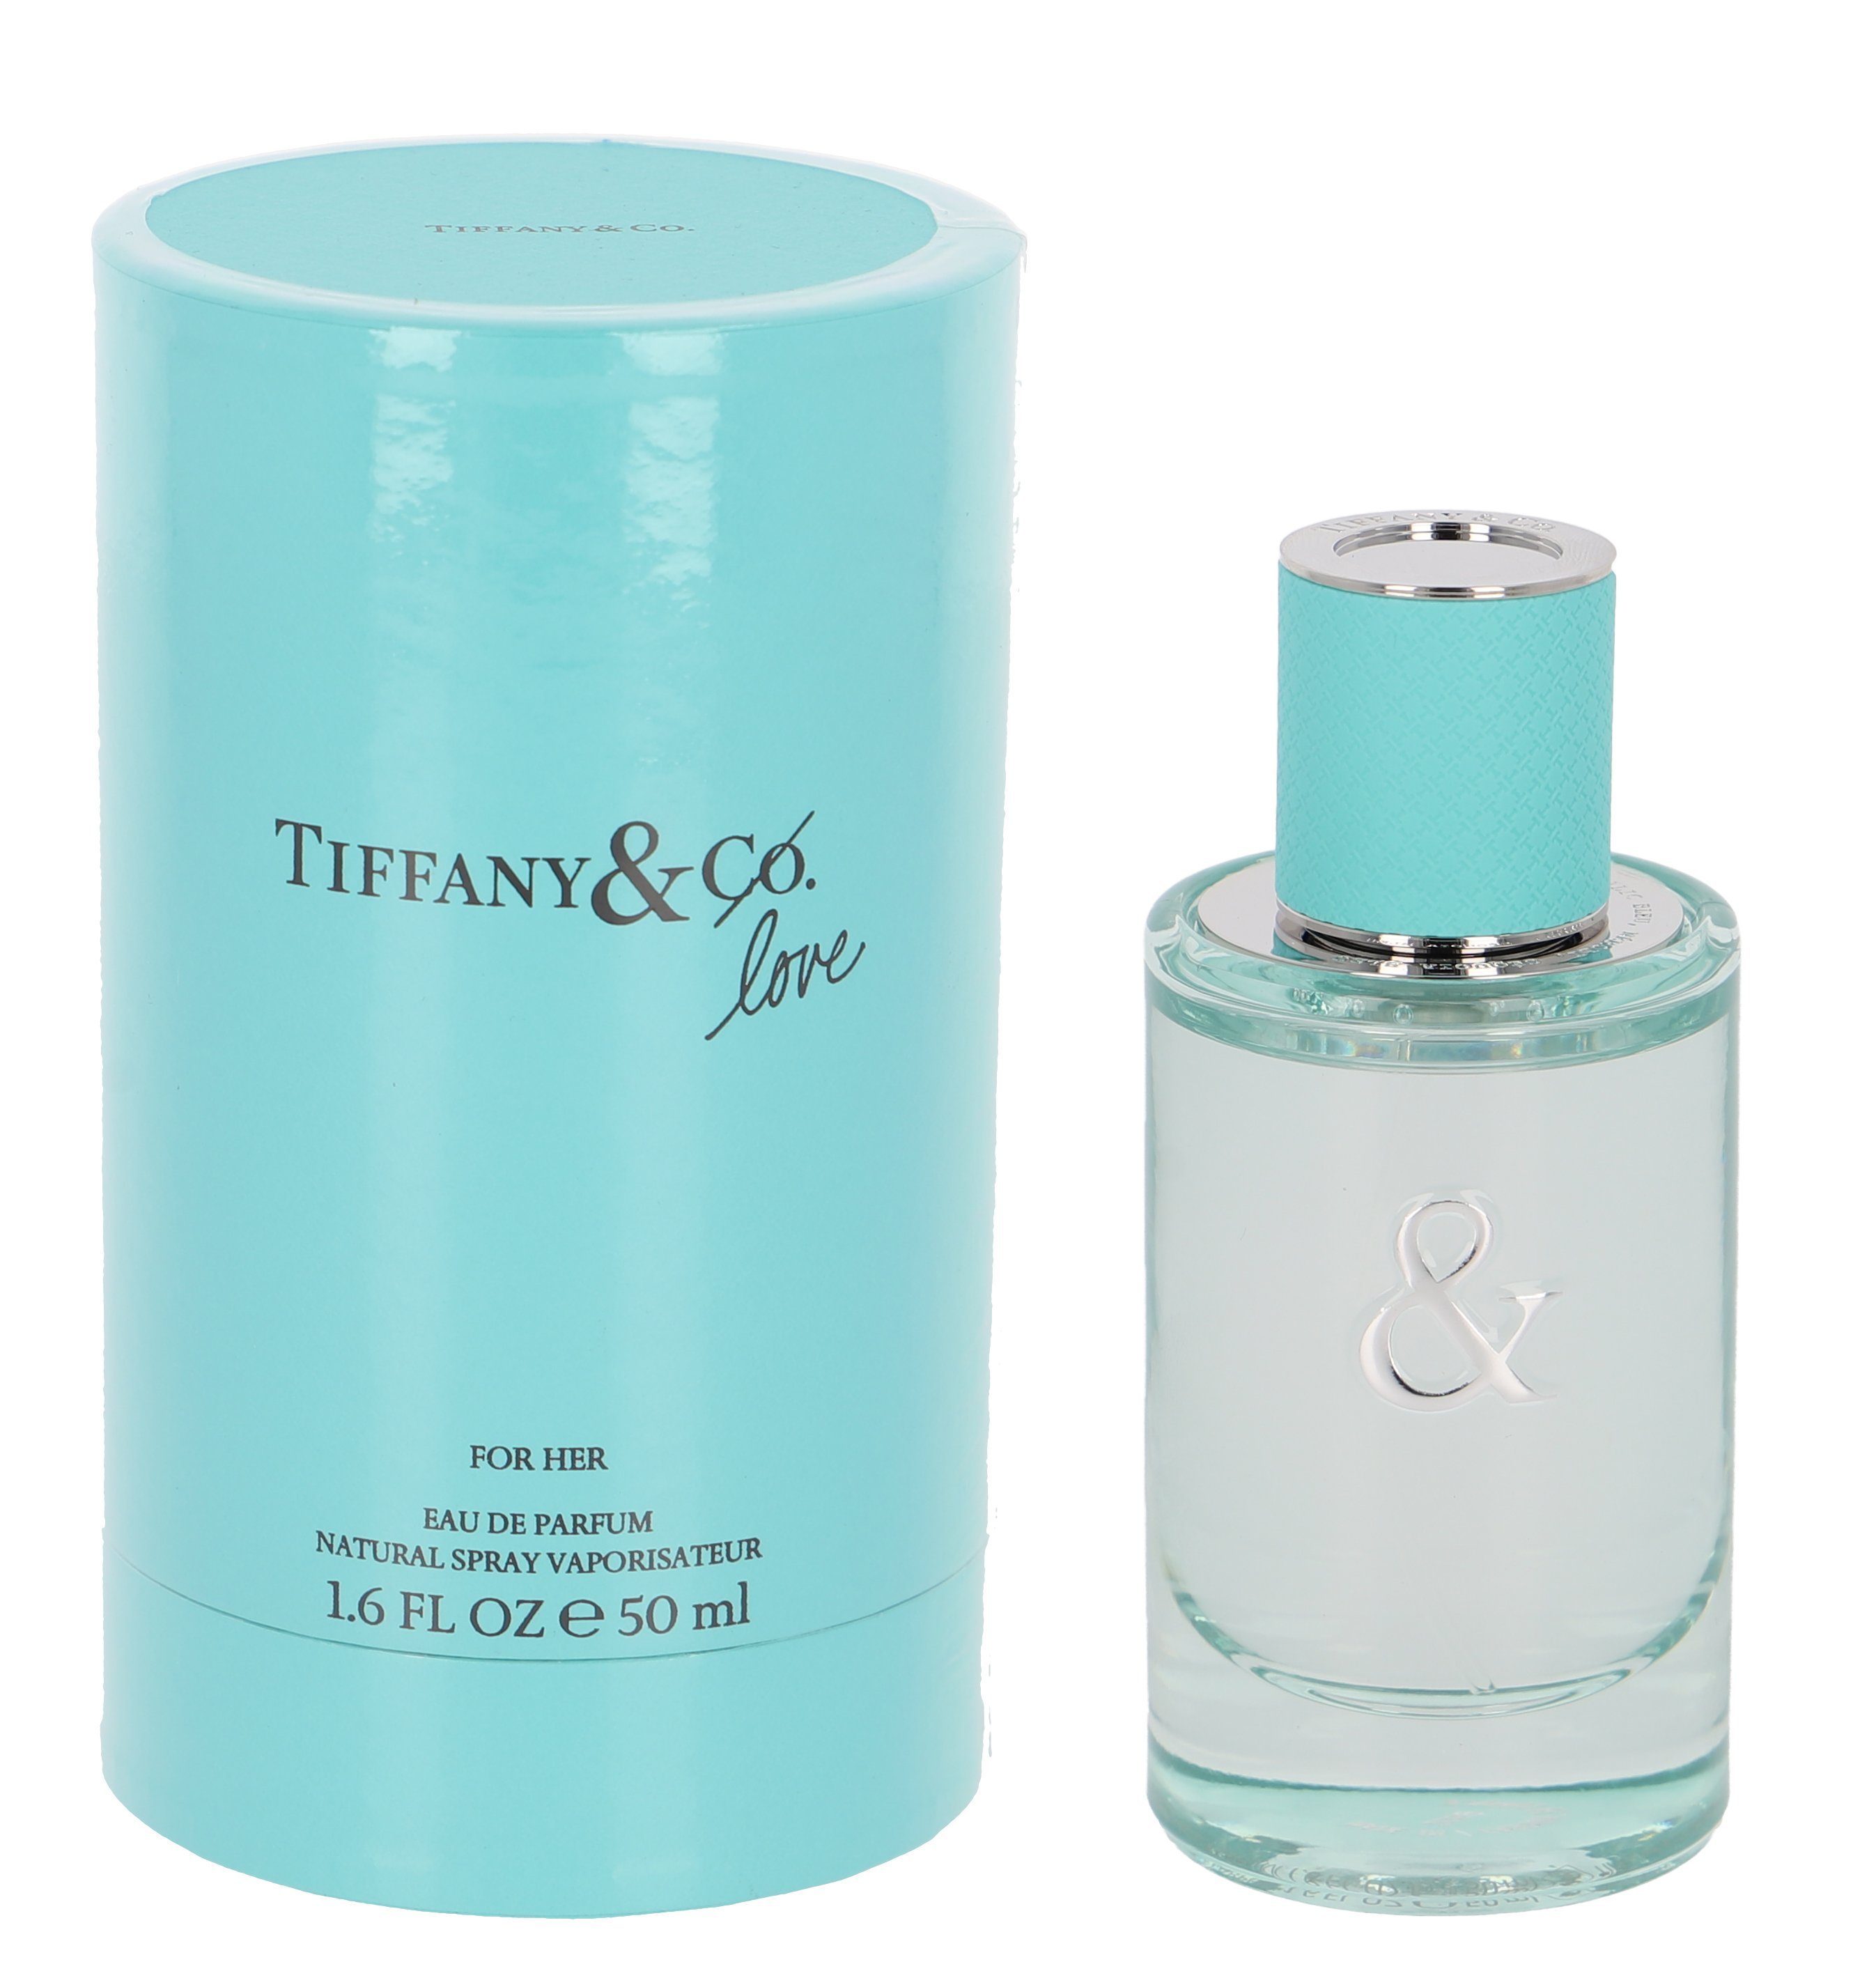 de Love & Tiffany Eau Co. Parfum Femme Tiffany&Co